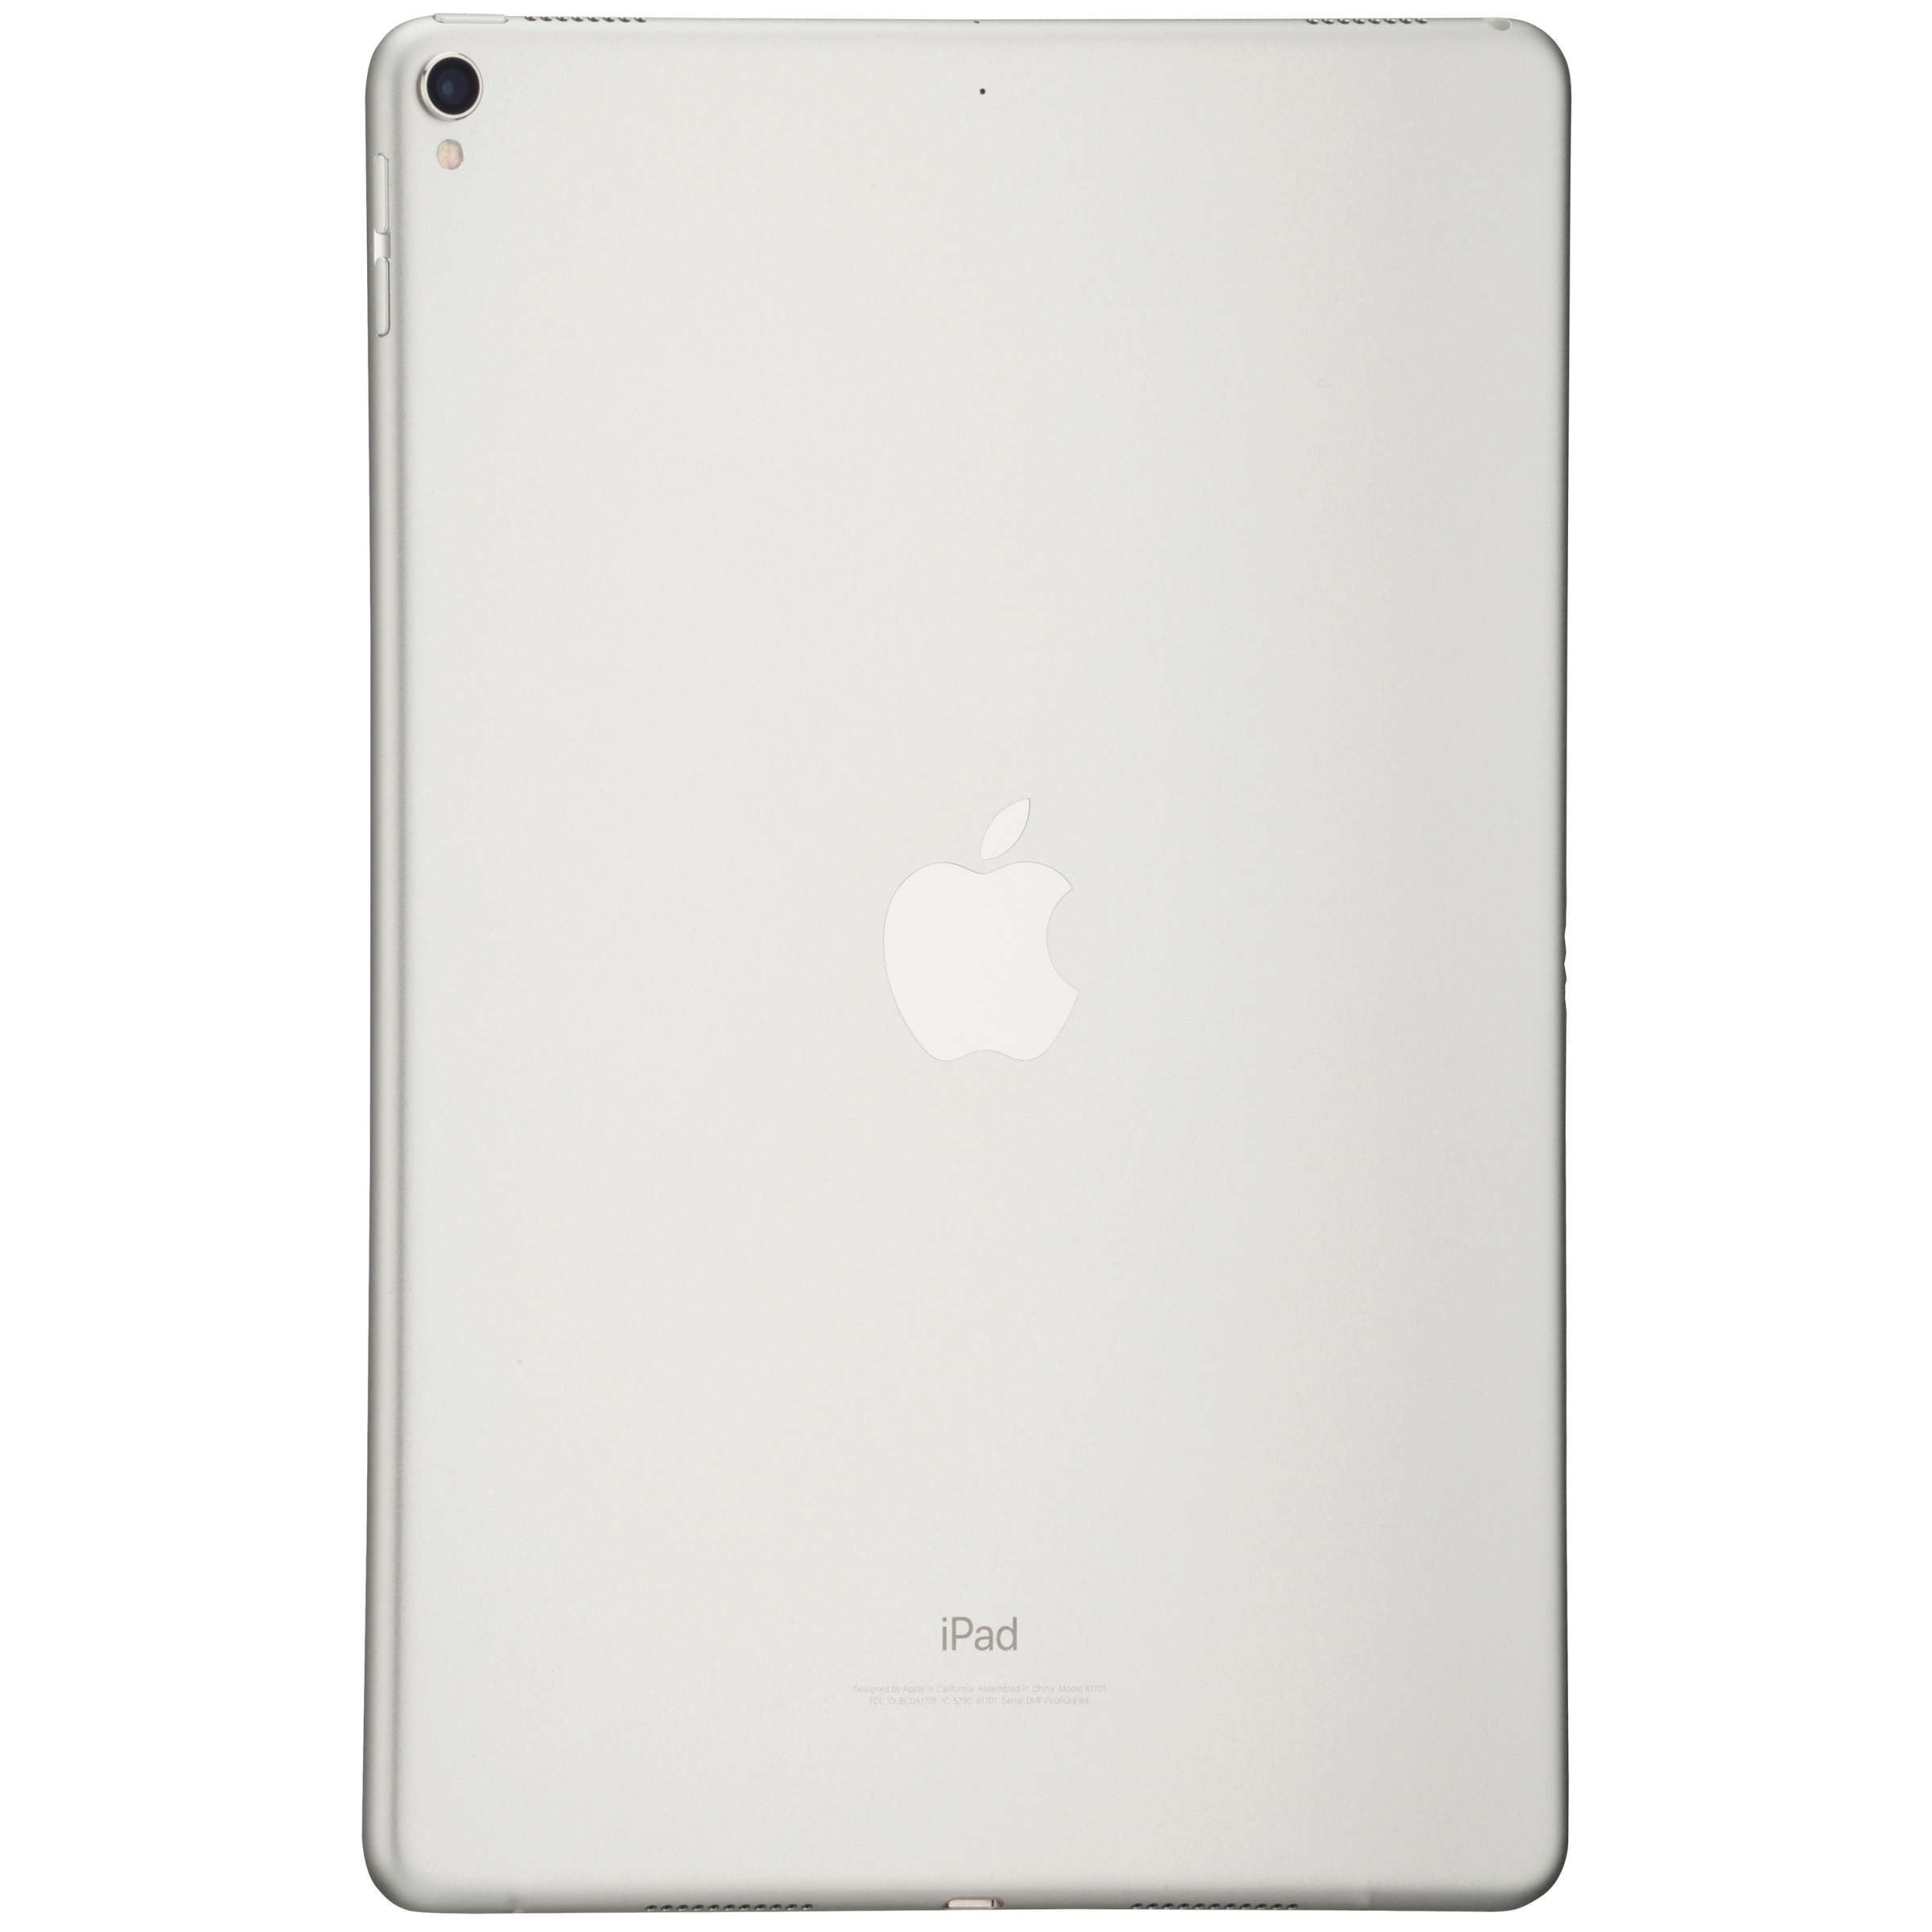 Apple 10.5-inch iPad Pro Wi-Fi 512GB (2017 Model), Silver - image 2 of 4